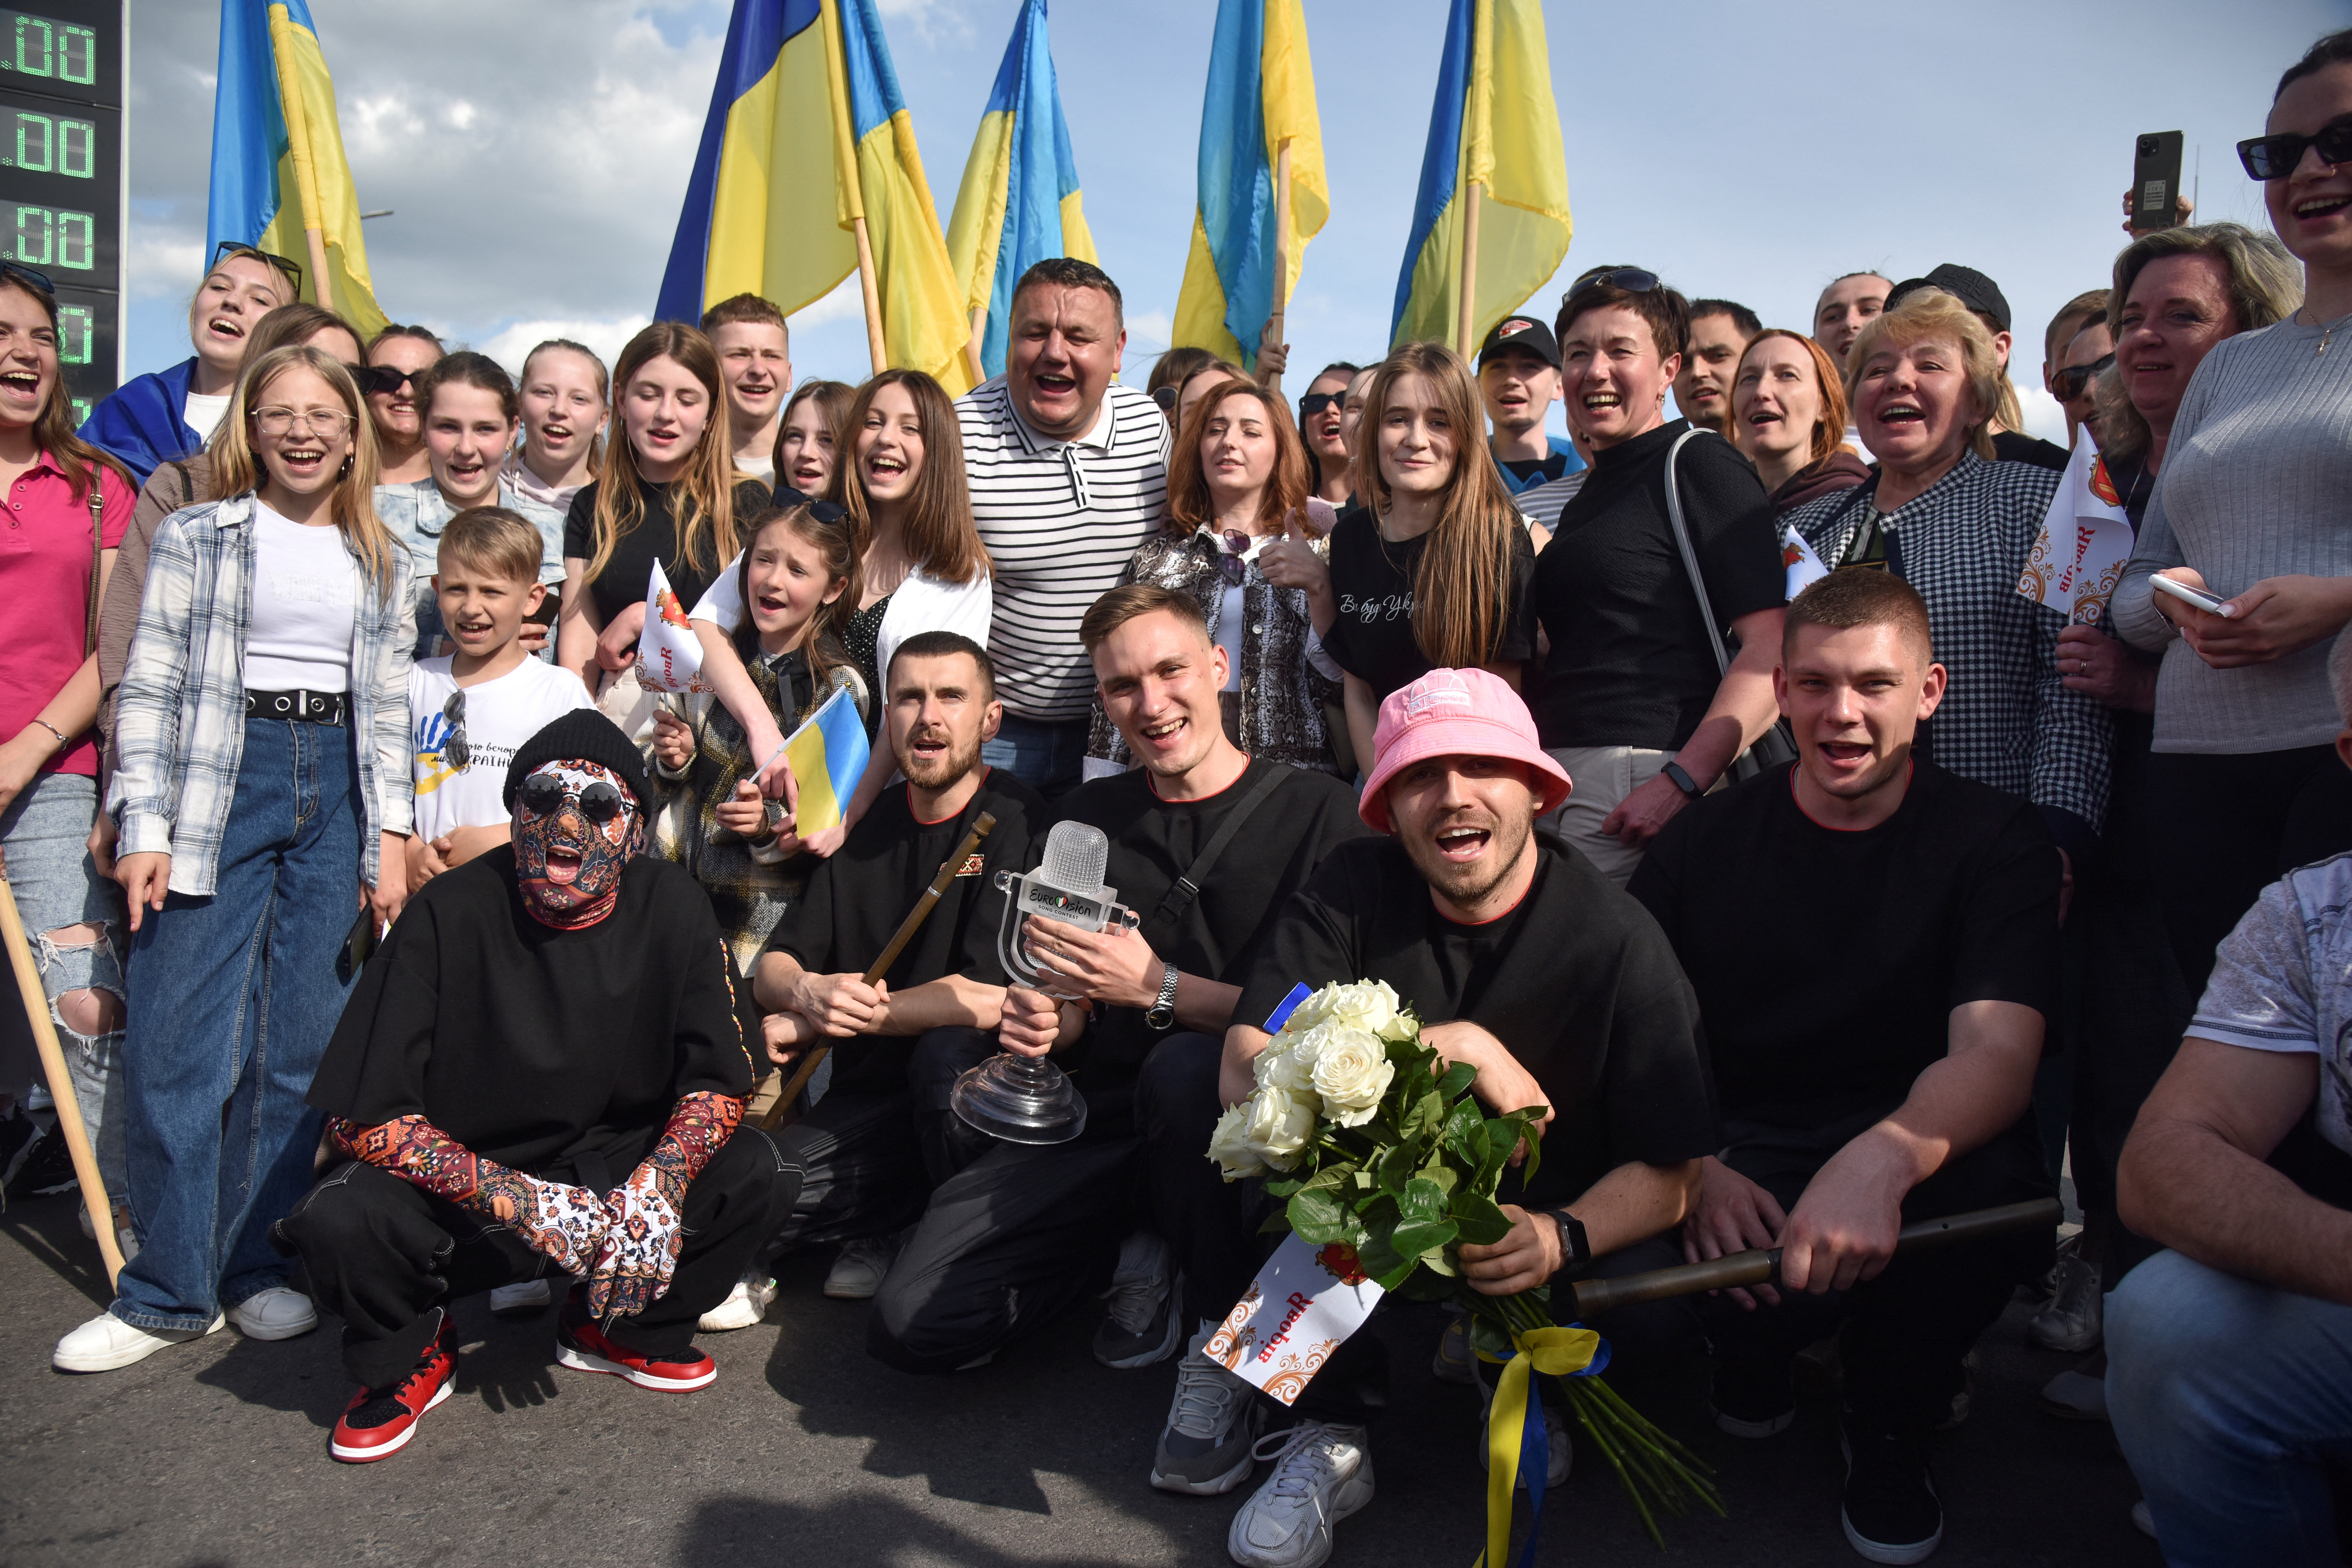 2022 Eurovision Song Contest winners Kalush Orchestra return to Ukraine in Lviv region